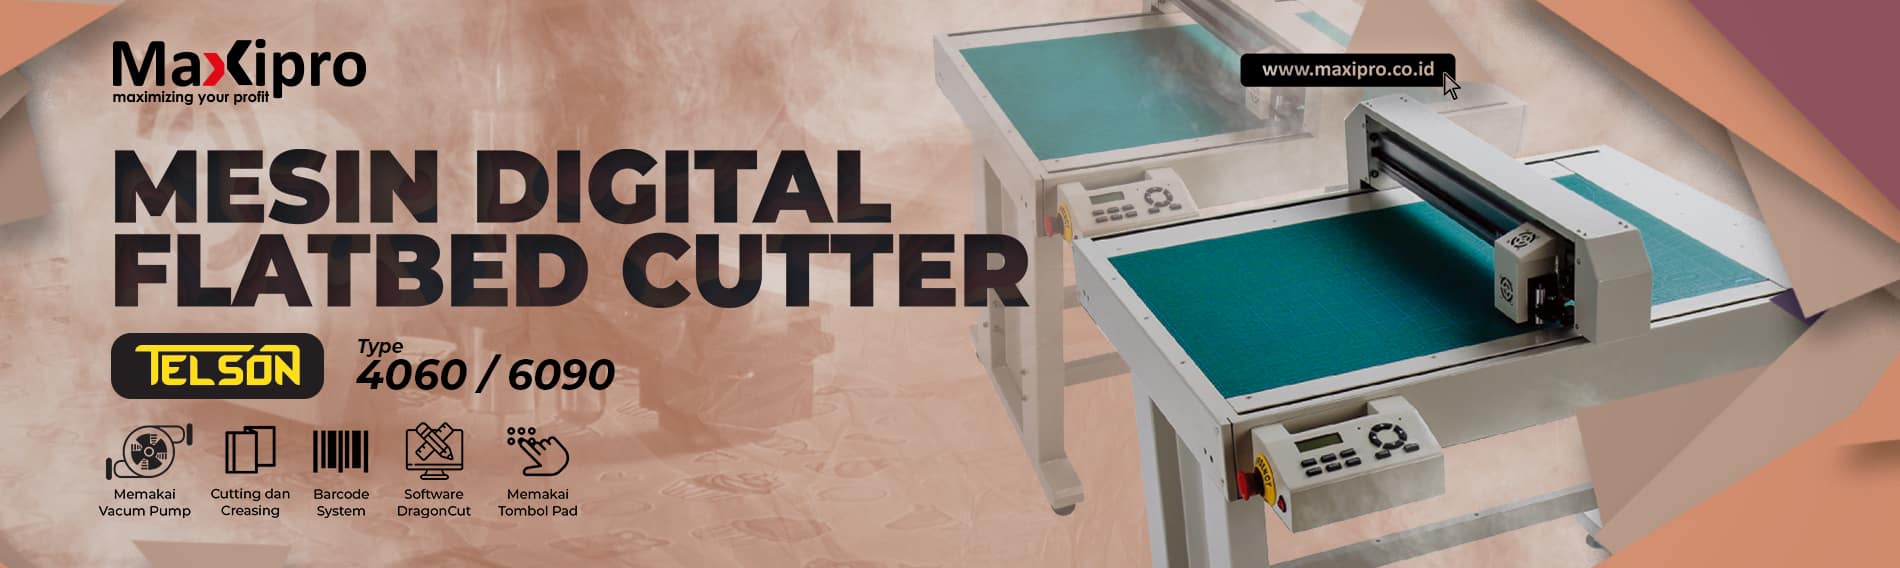 mesin-digital-flatbed-cutter-maxipro